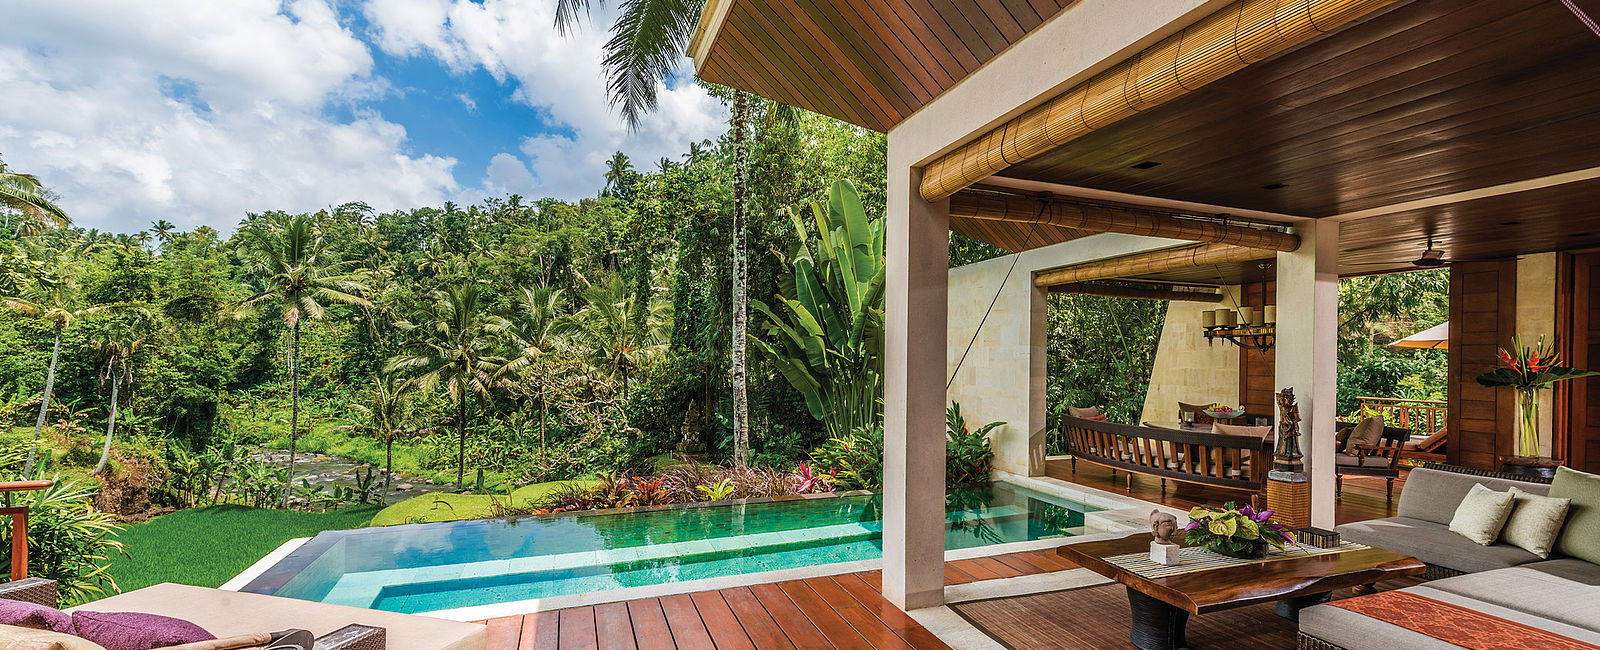 HOTEL ANGEBOTE
 Four Seasons Resort Bali at Sayan: BALI, TWICE THE MAGIC 
